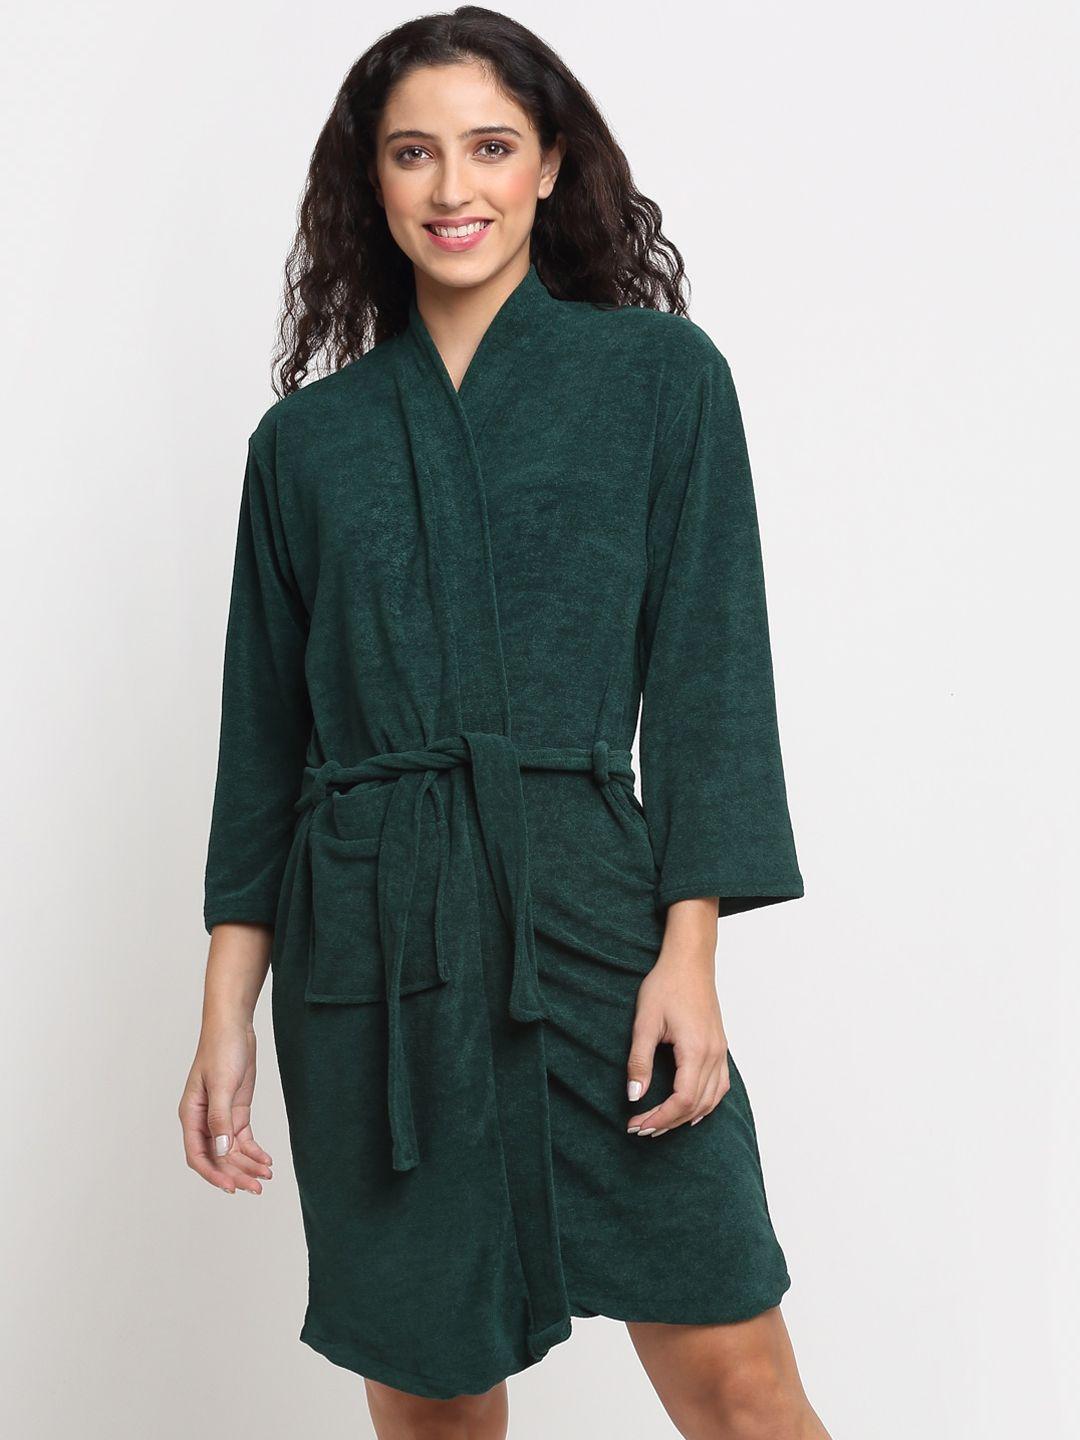 lacylook-women-green-solid-bath-robe